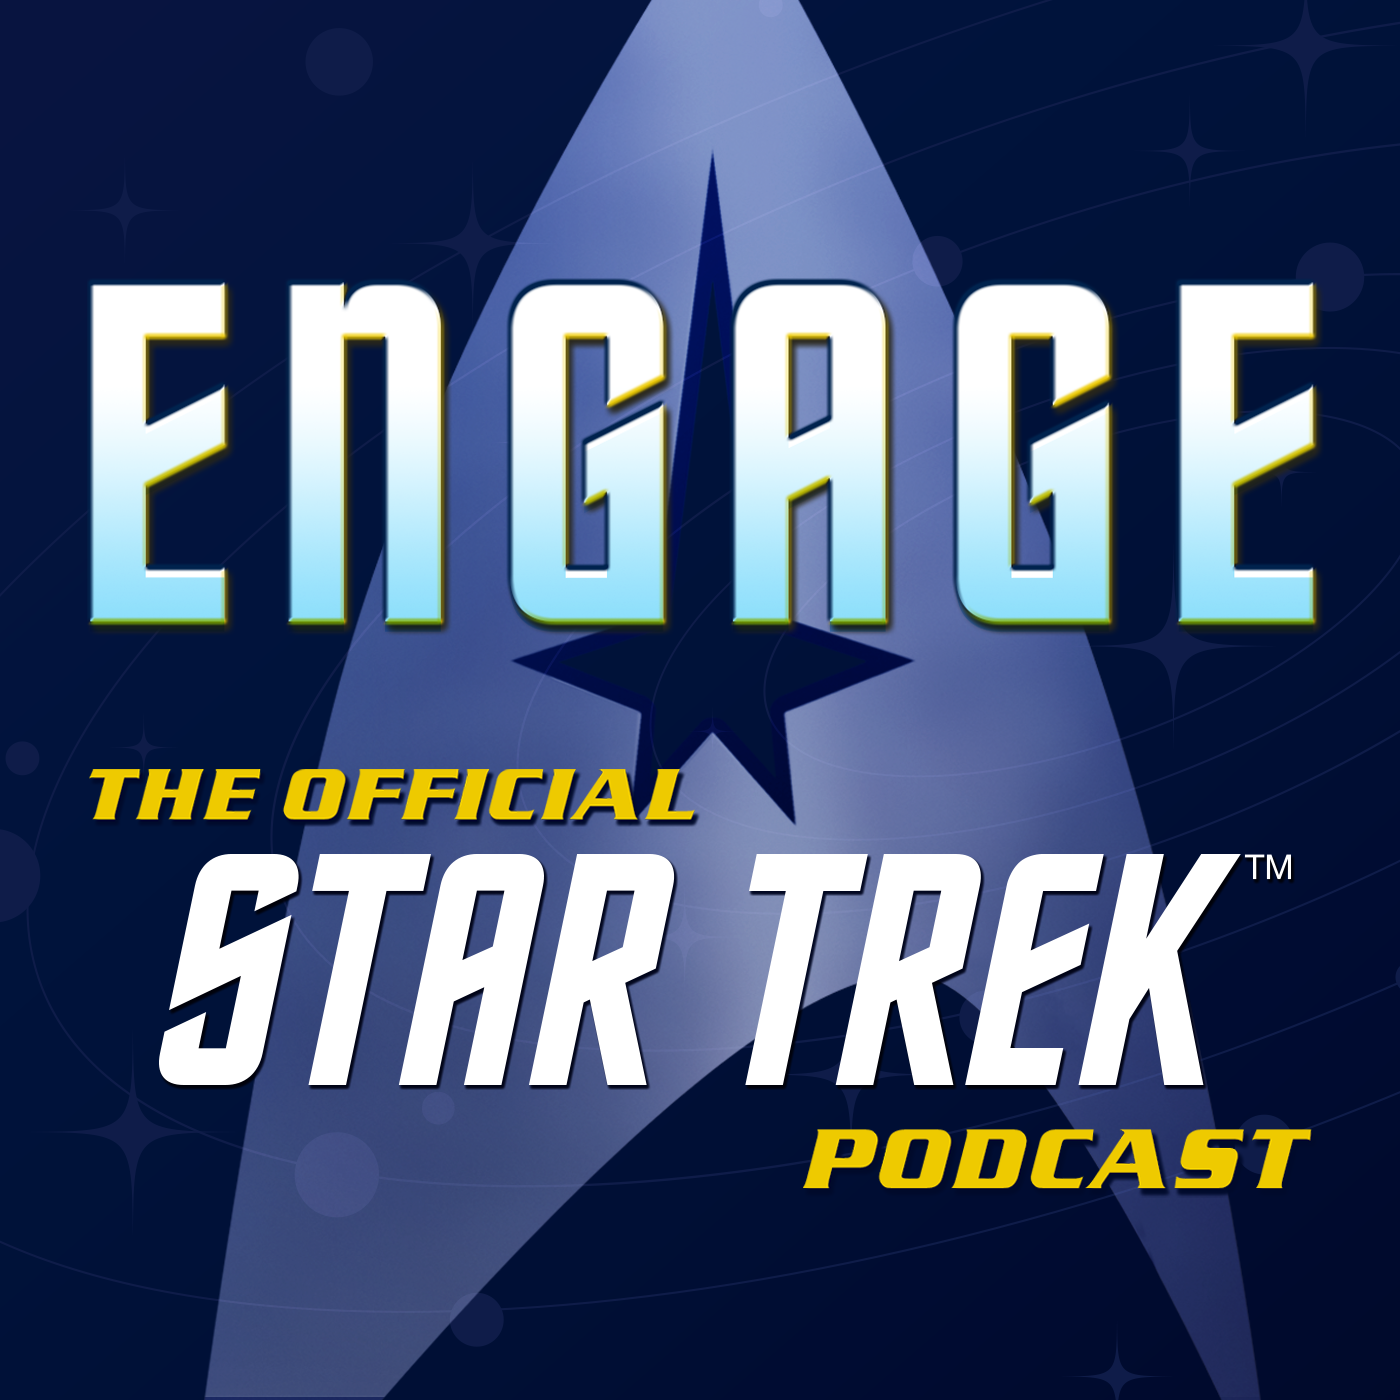 Episode 31: The Mythos Of Star Trek with Geek.com's Chris Radtke.